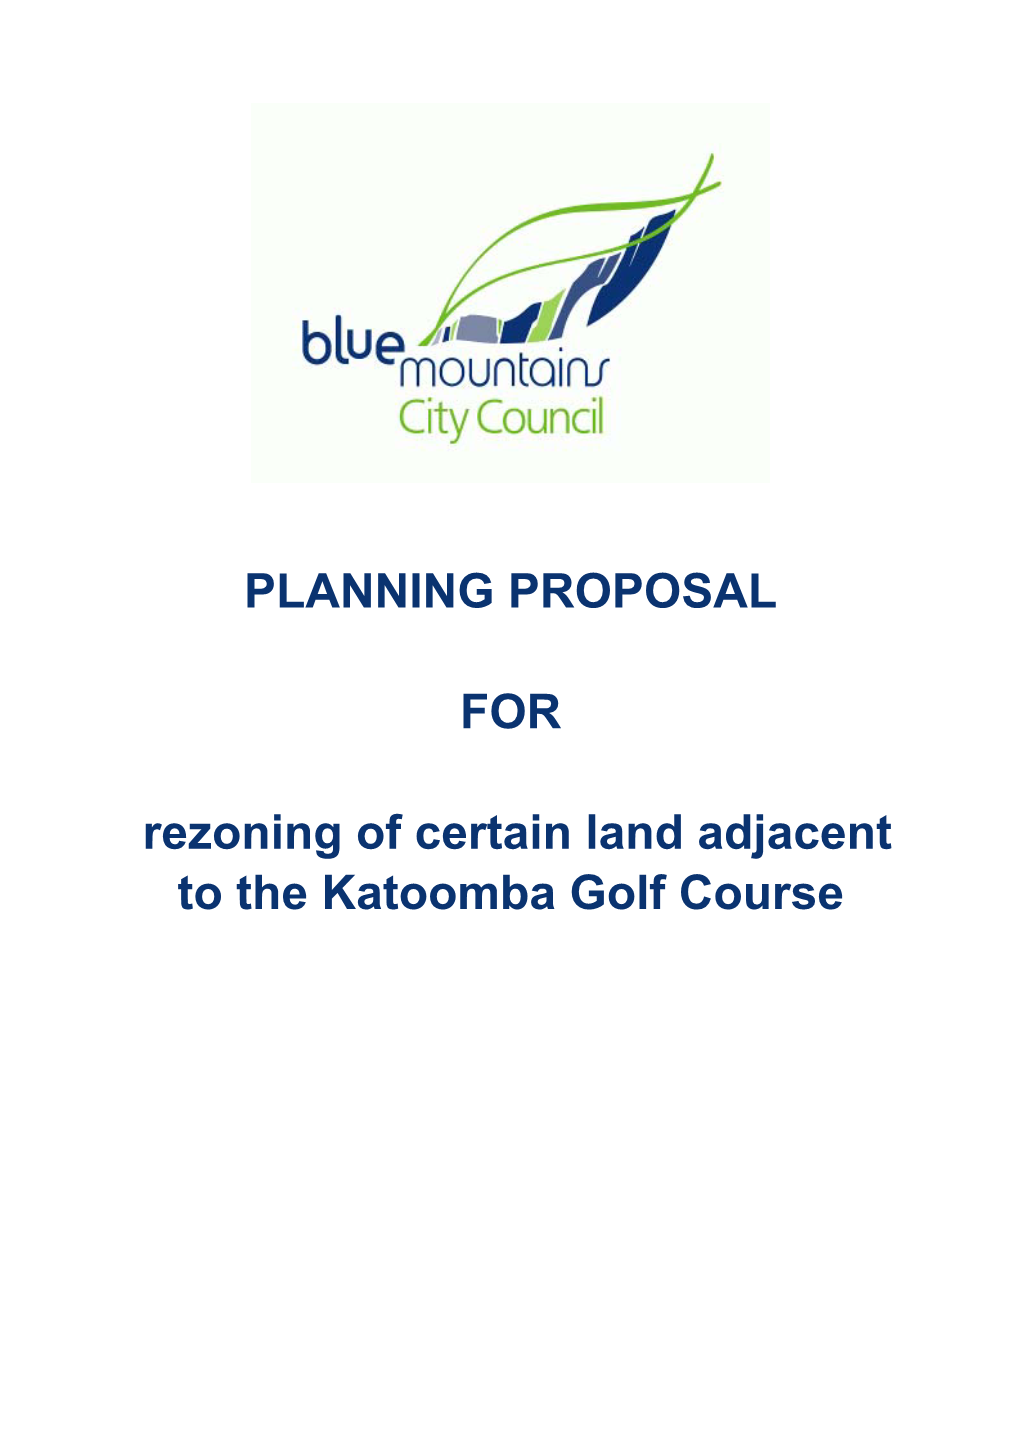 PLANNING PROPOSAL for Rezoning of Certain Land Adjacent To